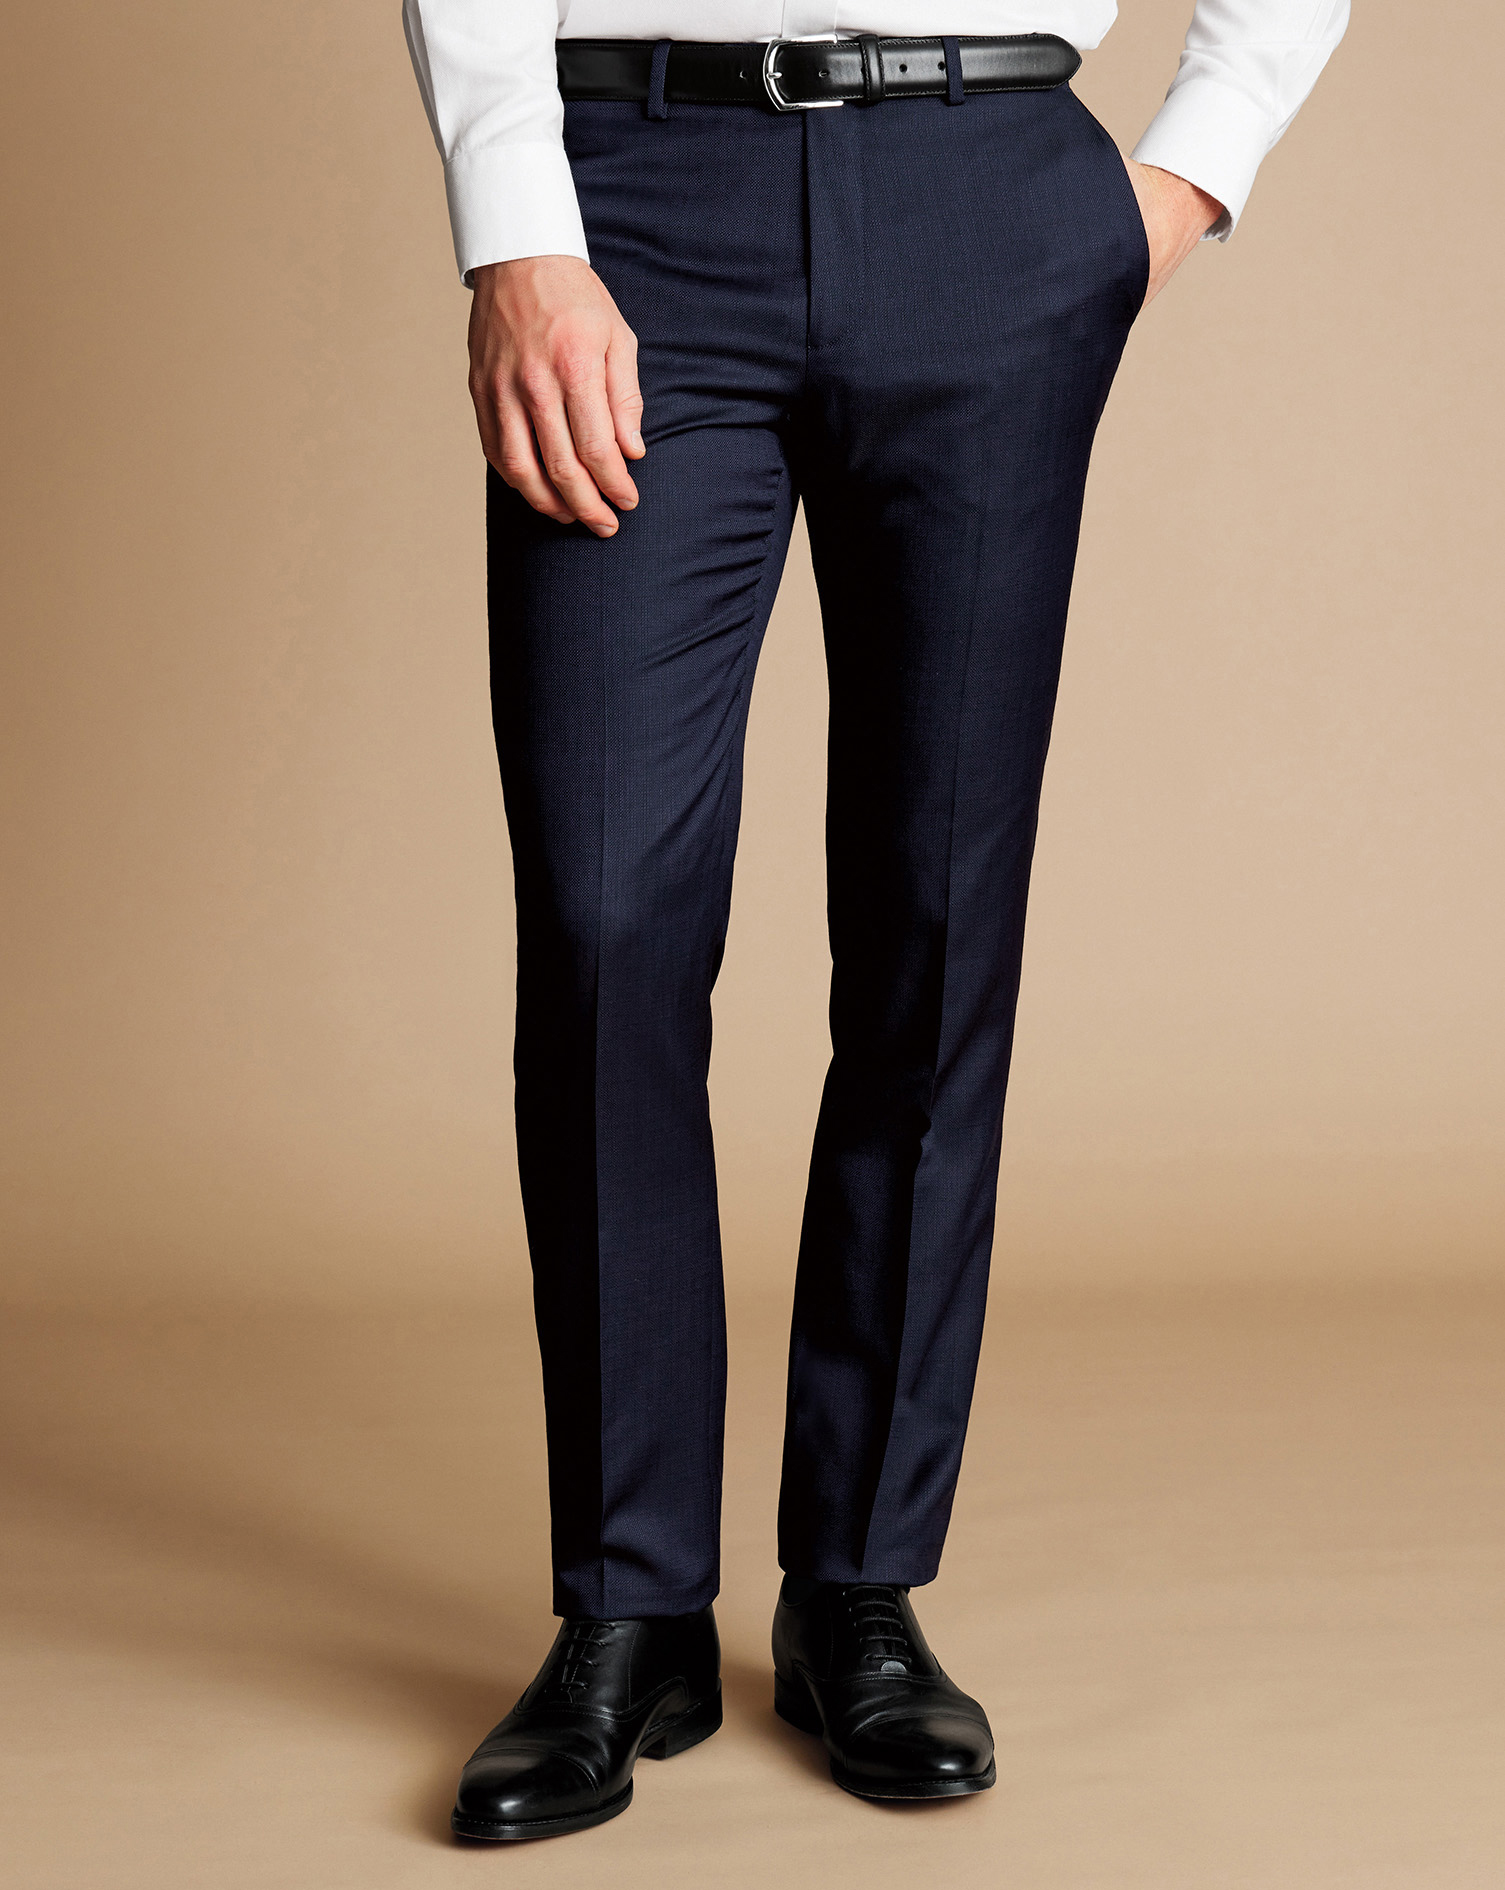 Men's Charles Tyrwhitt Italian Luxury Suit Trousers - Dark Navy Blue Size 32/38 Wool
